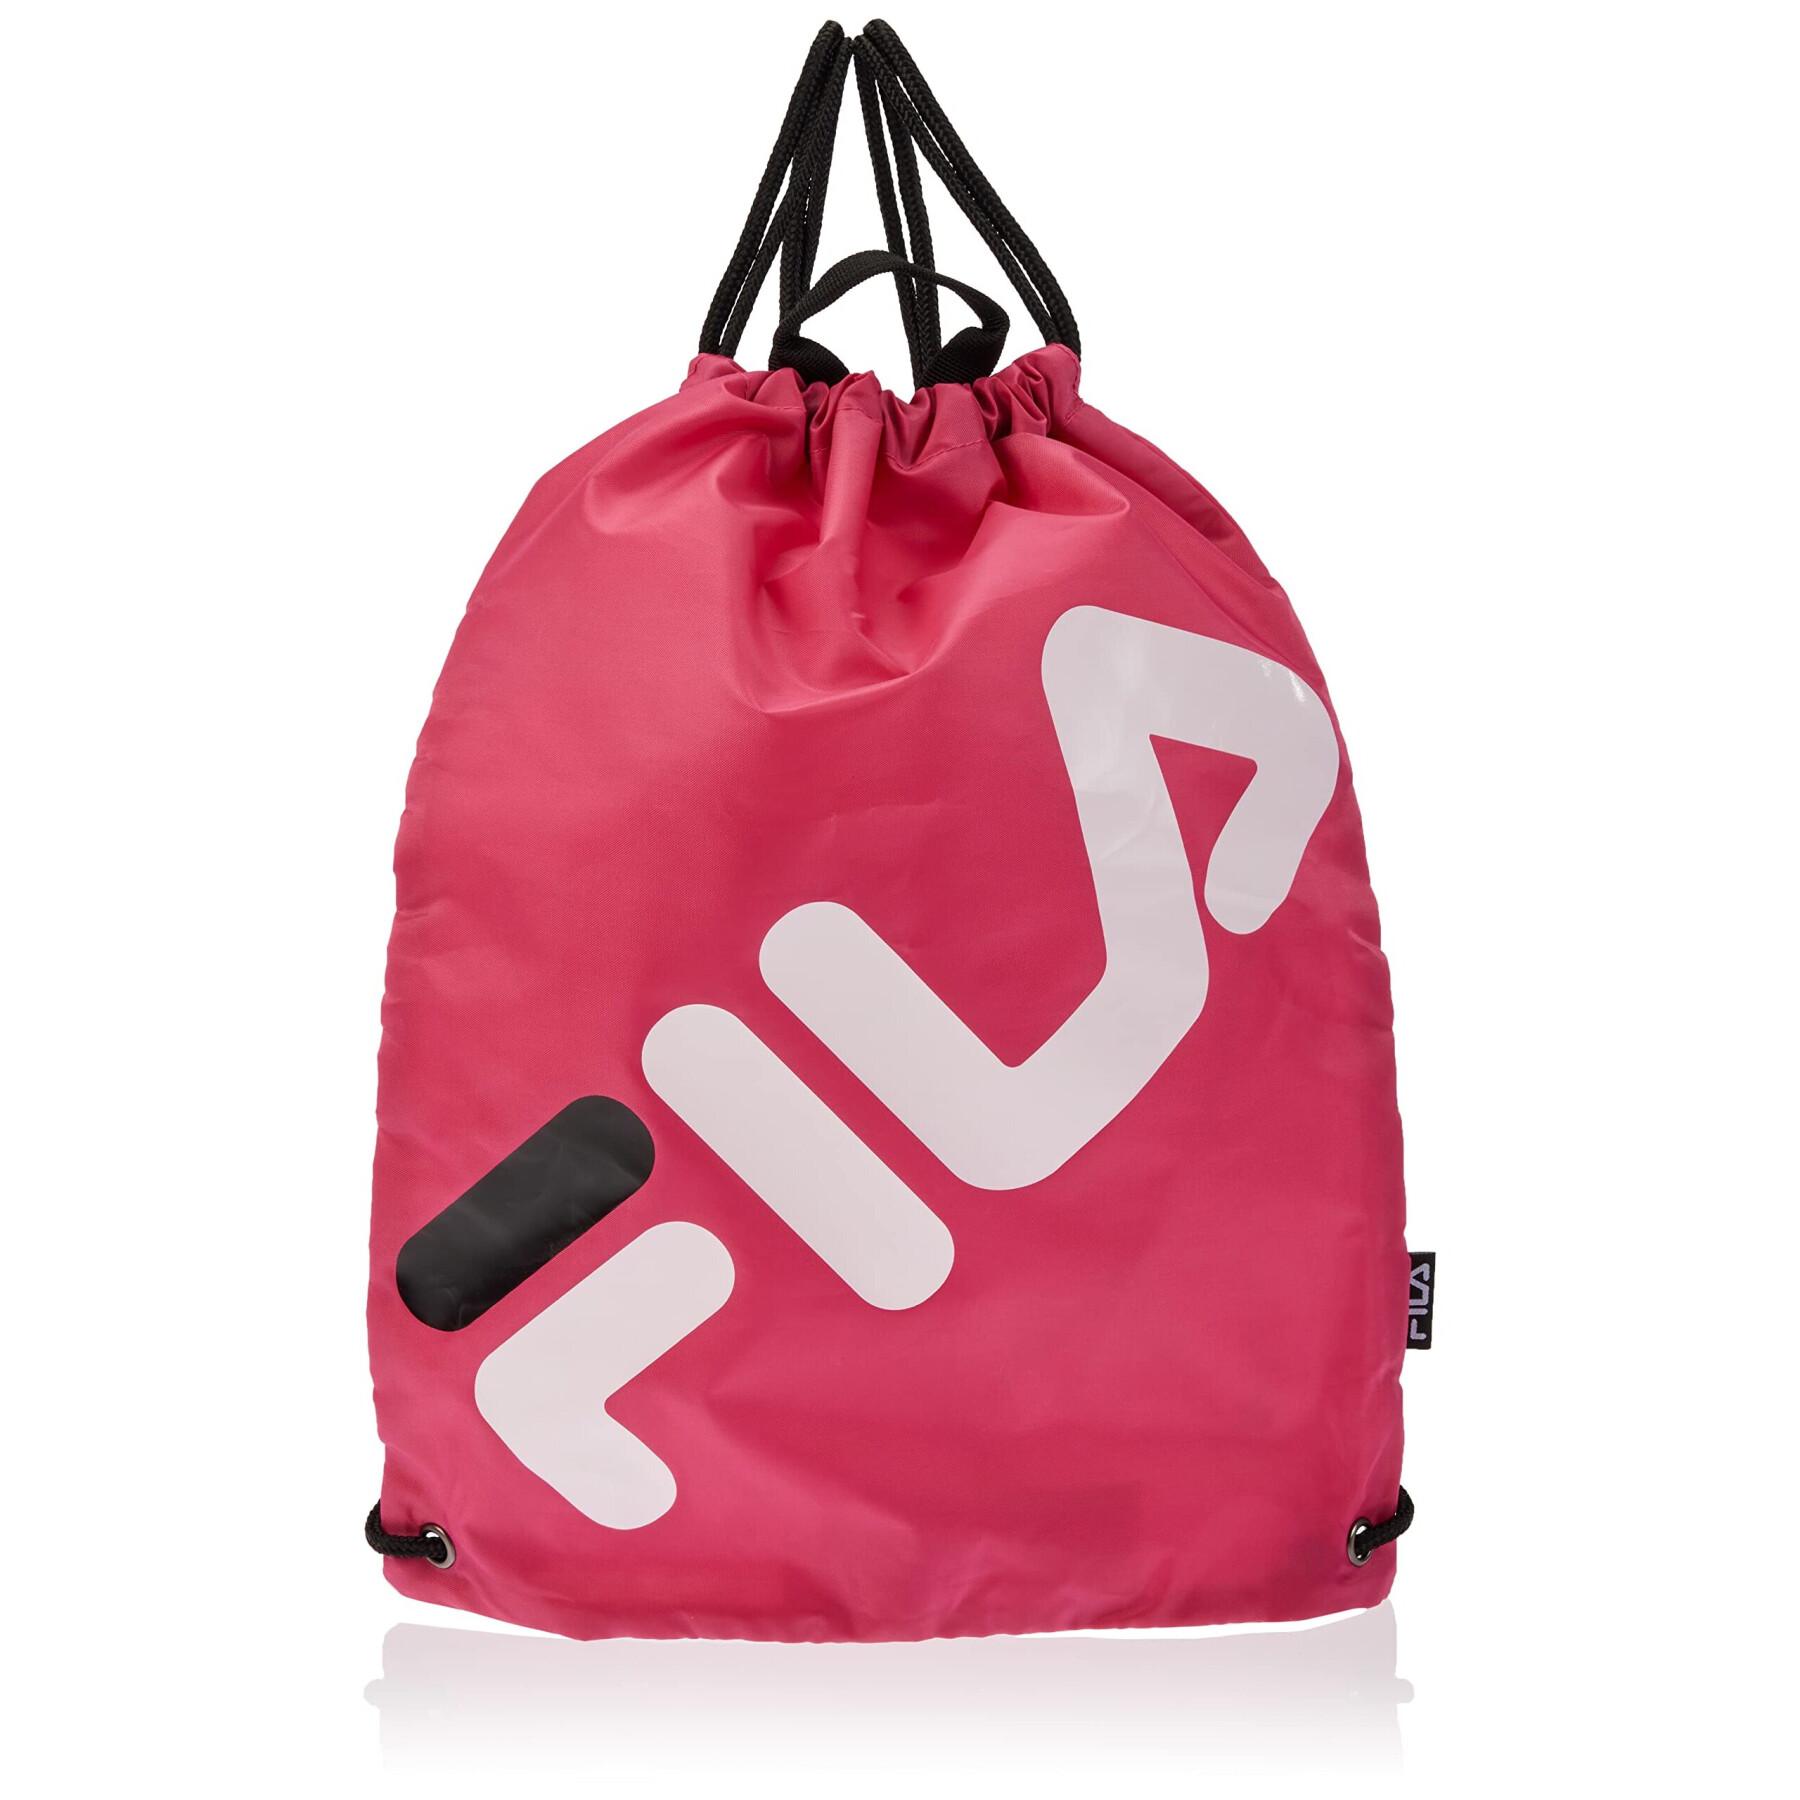 Drawstring backpack Fila Bogra Sport